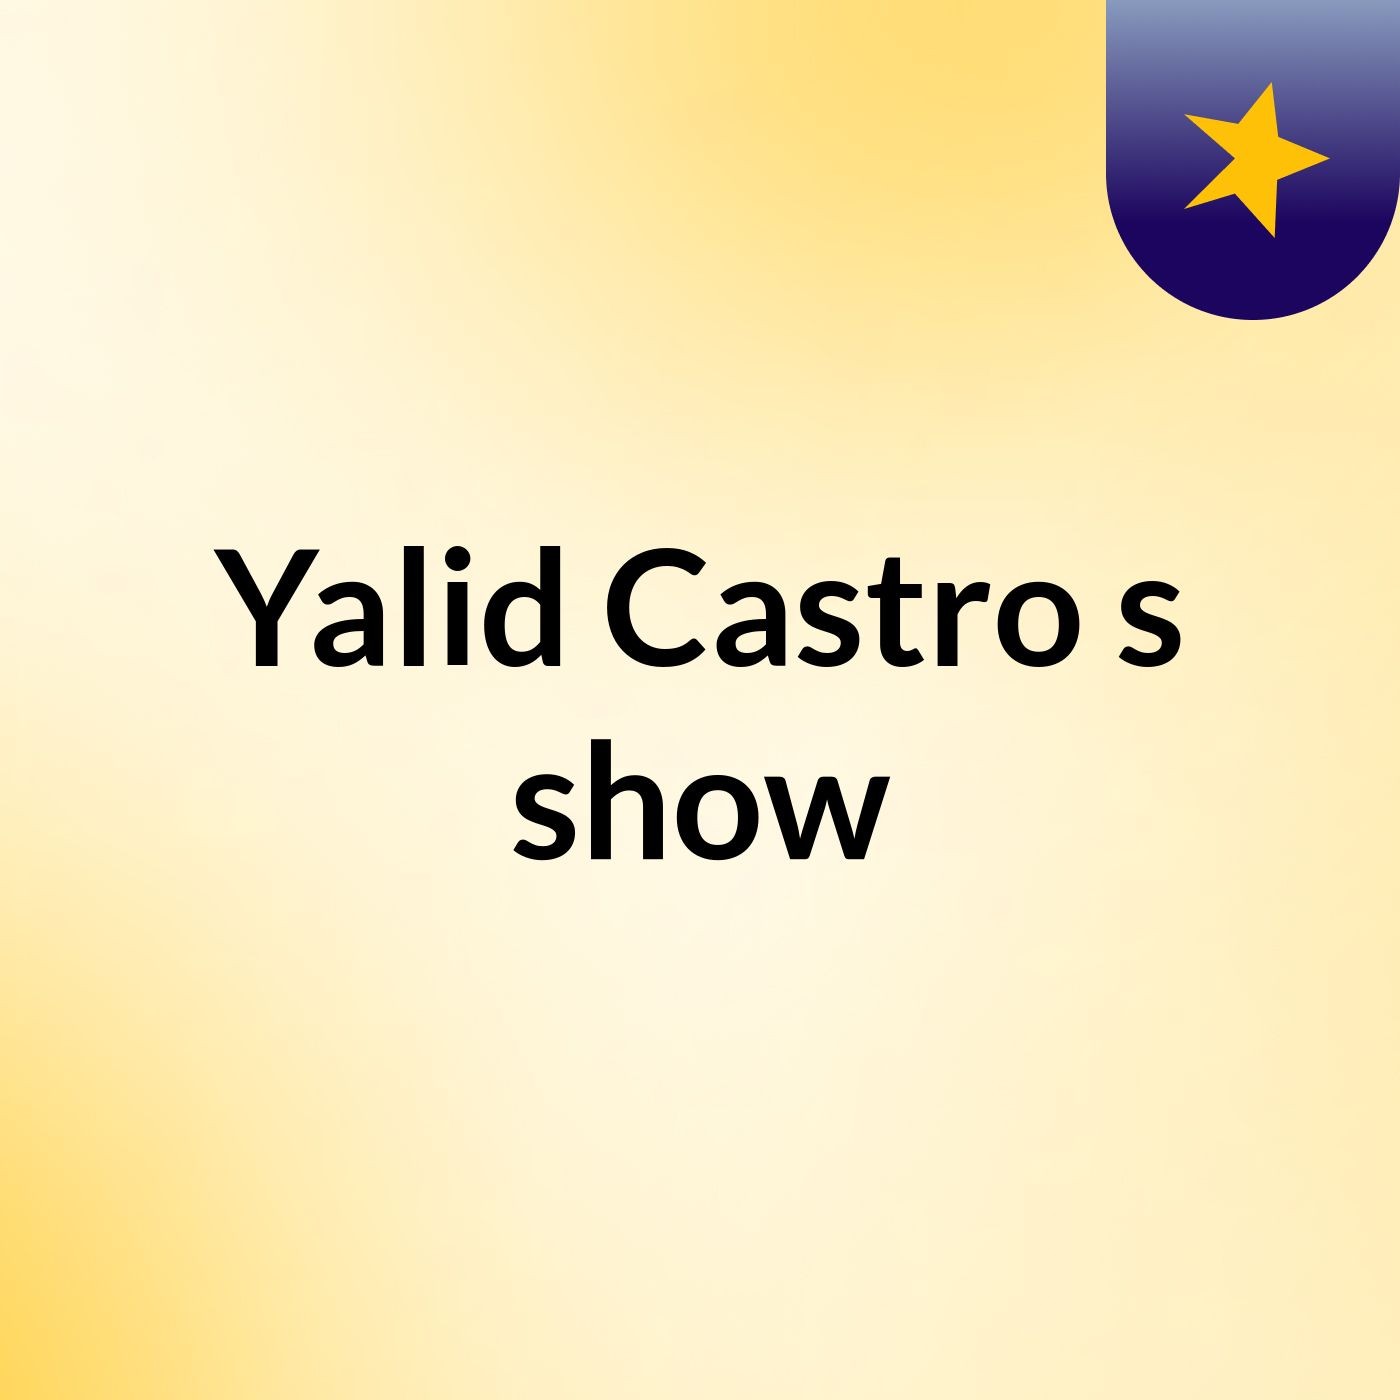 Yalid Castro's show